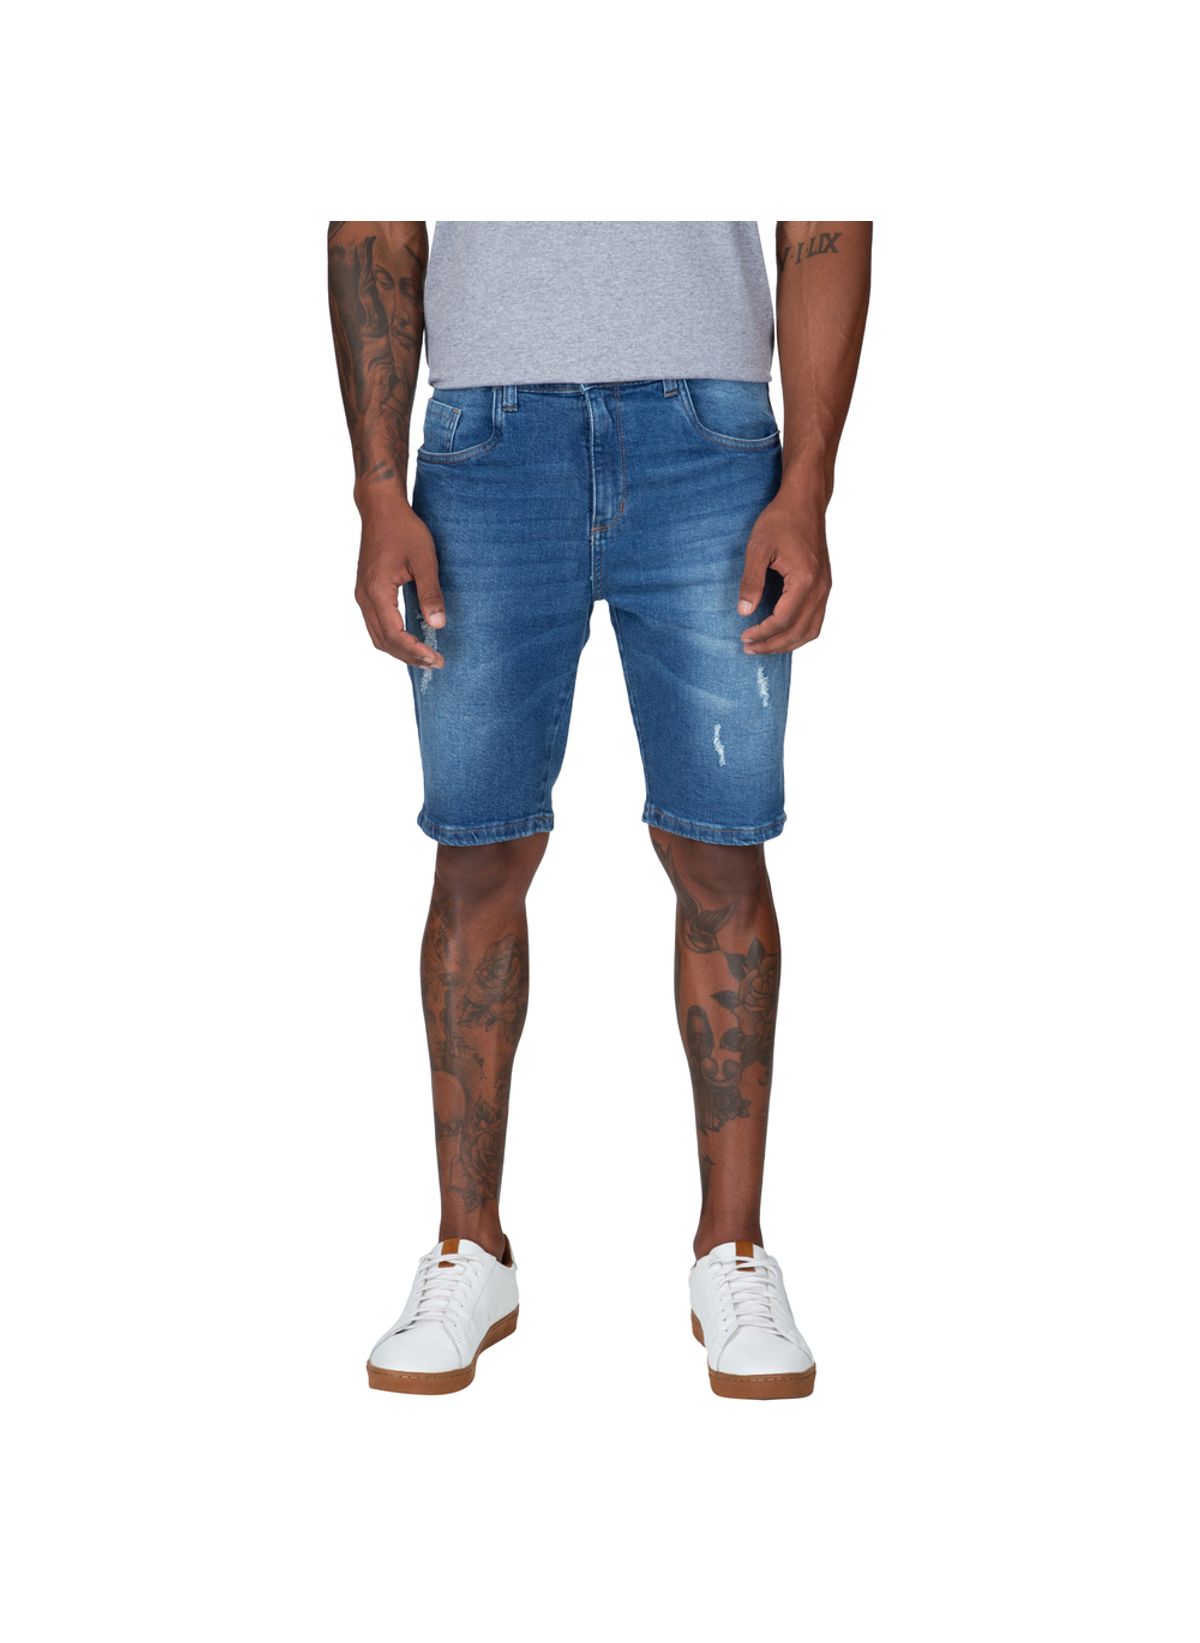 Bermuda Masculina Jeans c/ Puídos Média